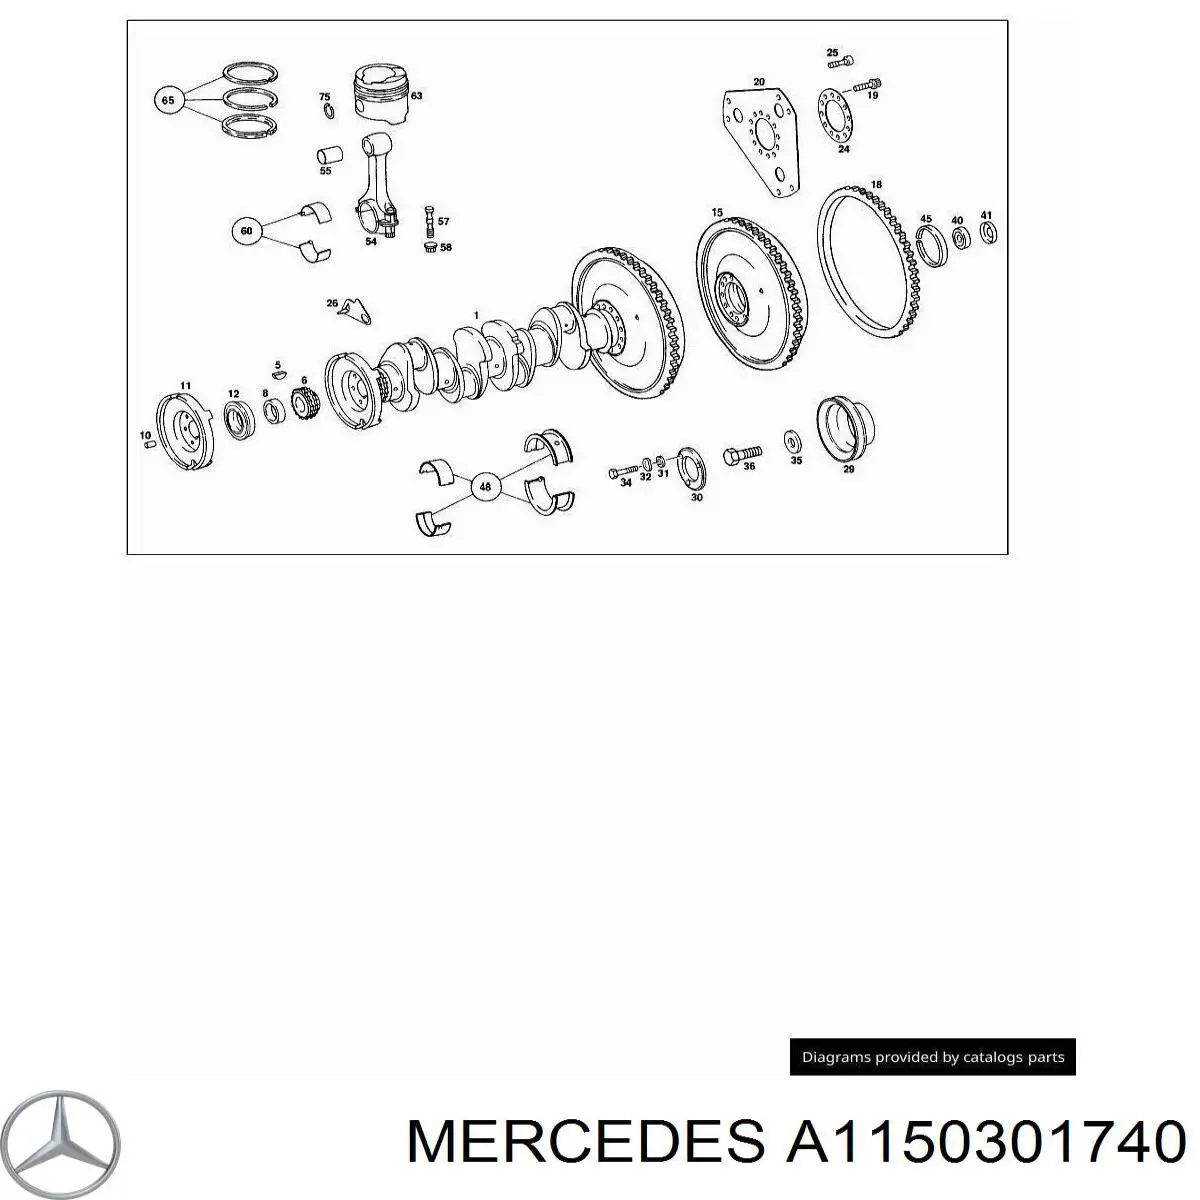 A1150301840 Mercedes вкладыши коленвала коренные, комплект, стандарт (std)